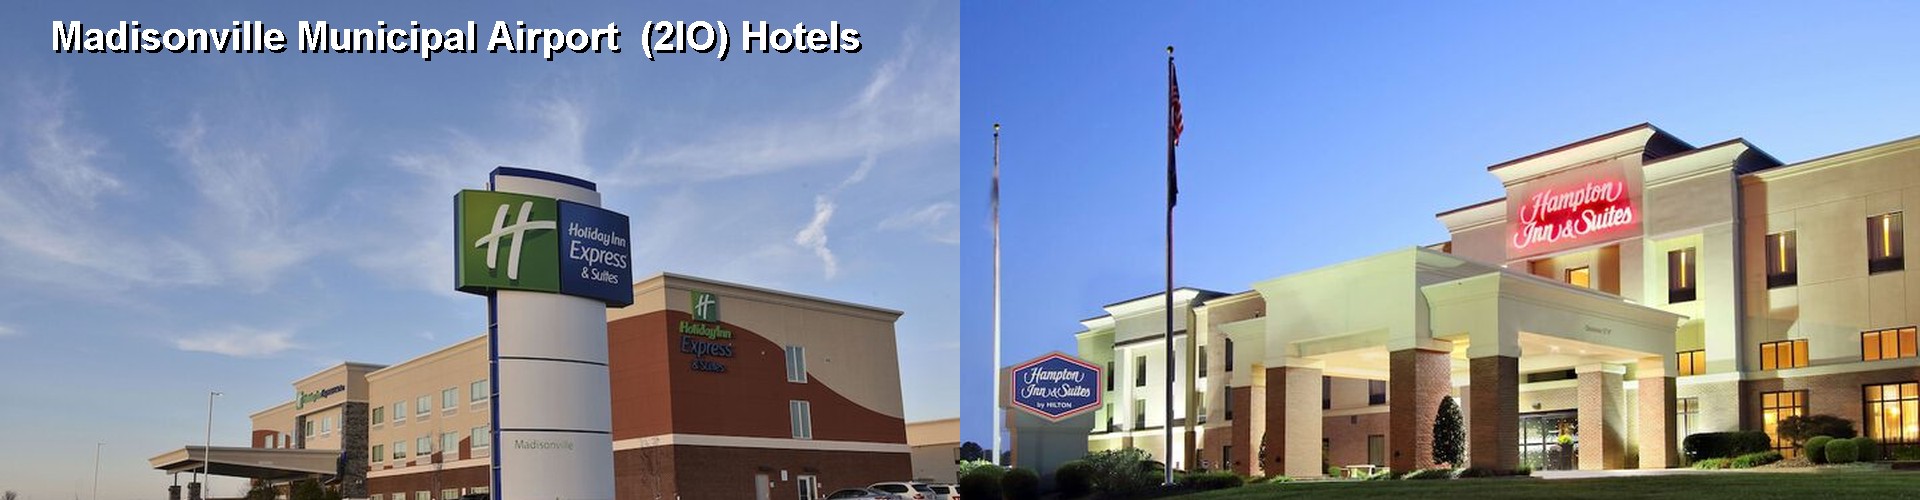 4 Best Hotels near Madisonville Municipal Airport  (2IO)